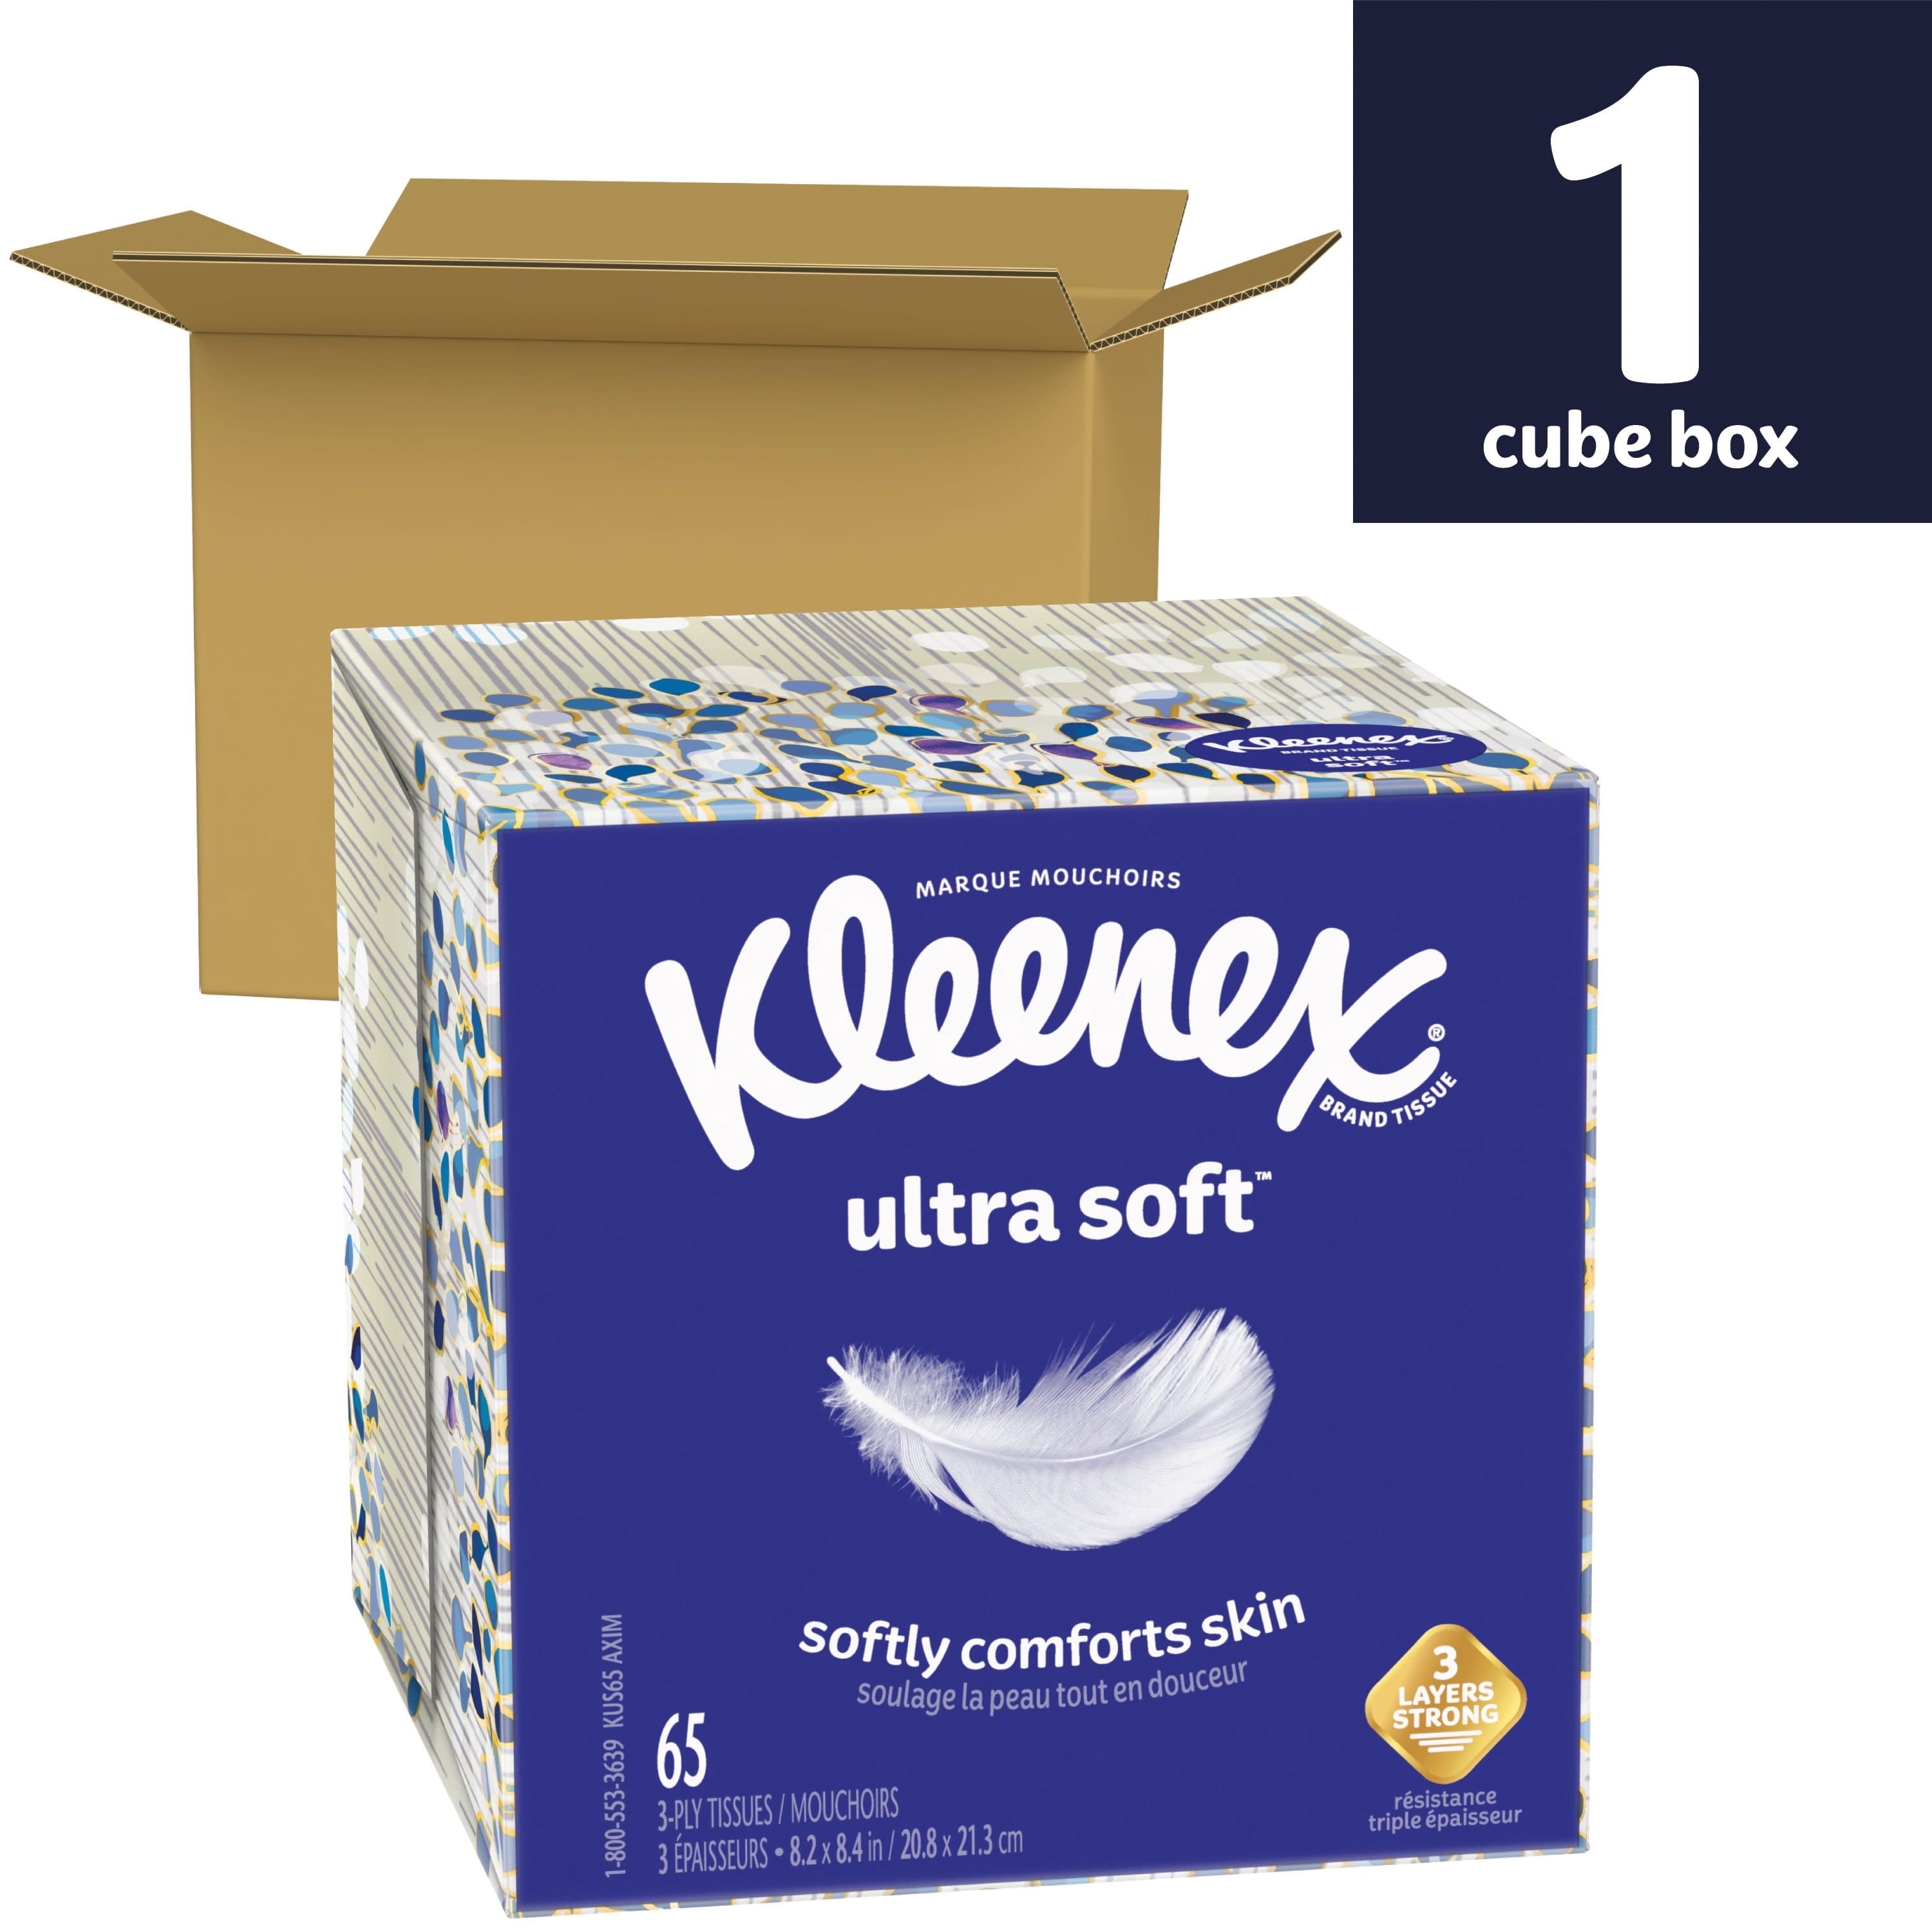 260 Tissues 65 Tissues per Box Kleenex Ultra Soft Facial Tissues 4 Cube Boxes 